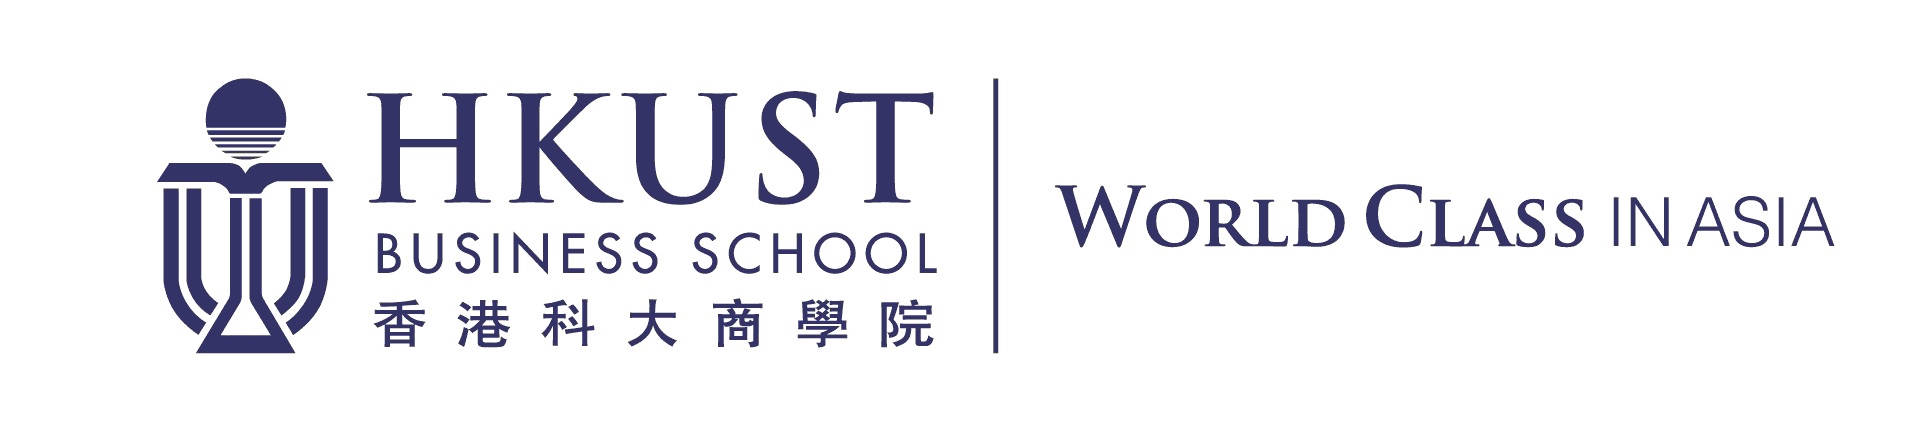 Школа бизнеса сочи. HKUST Campus. Fortune School of Business эмблема. Logo HKUST Business School. Открытая школа бизнеса логотип.